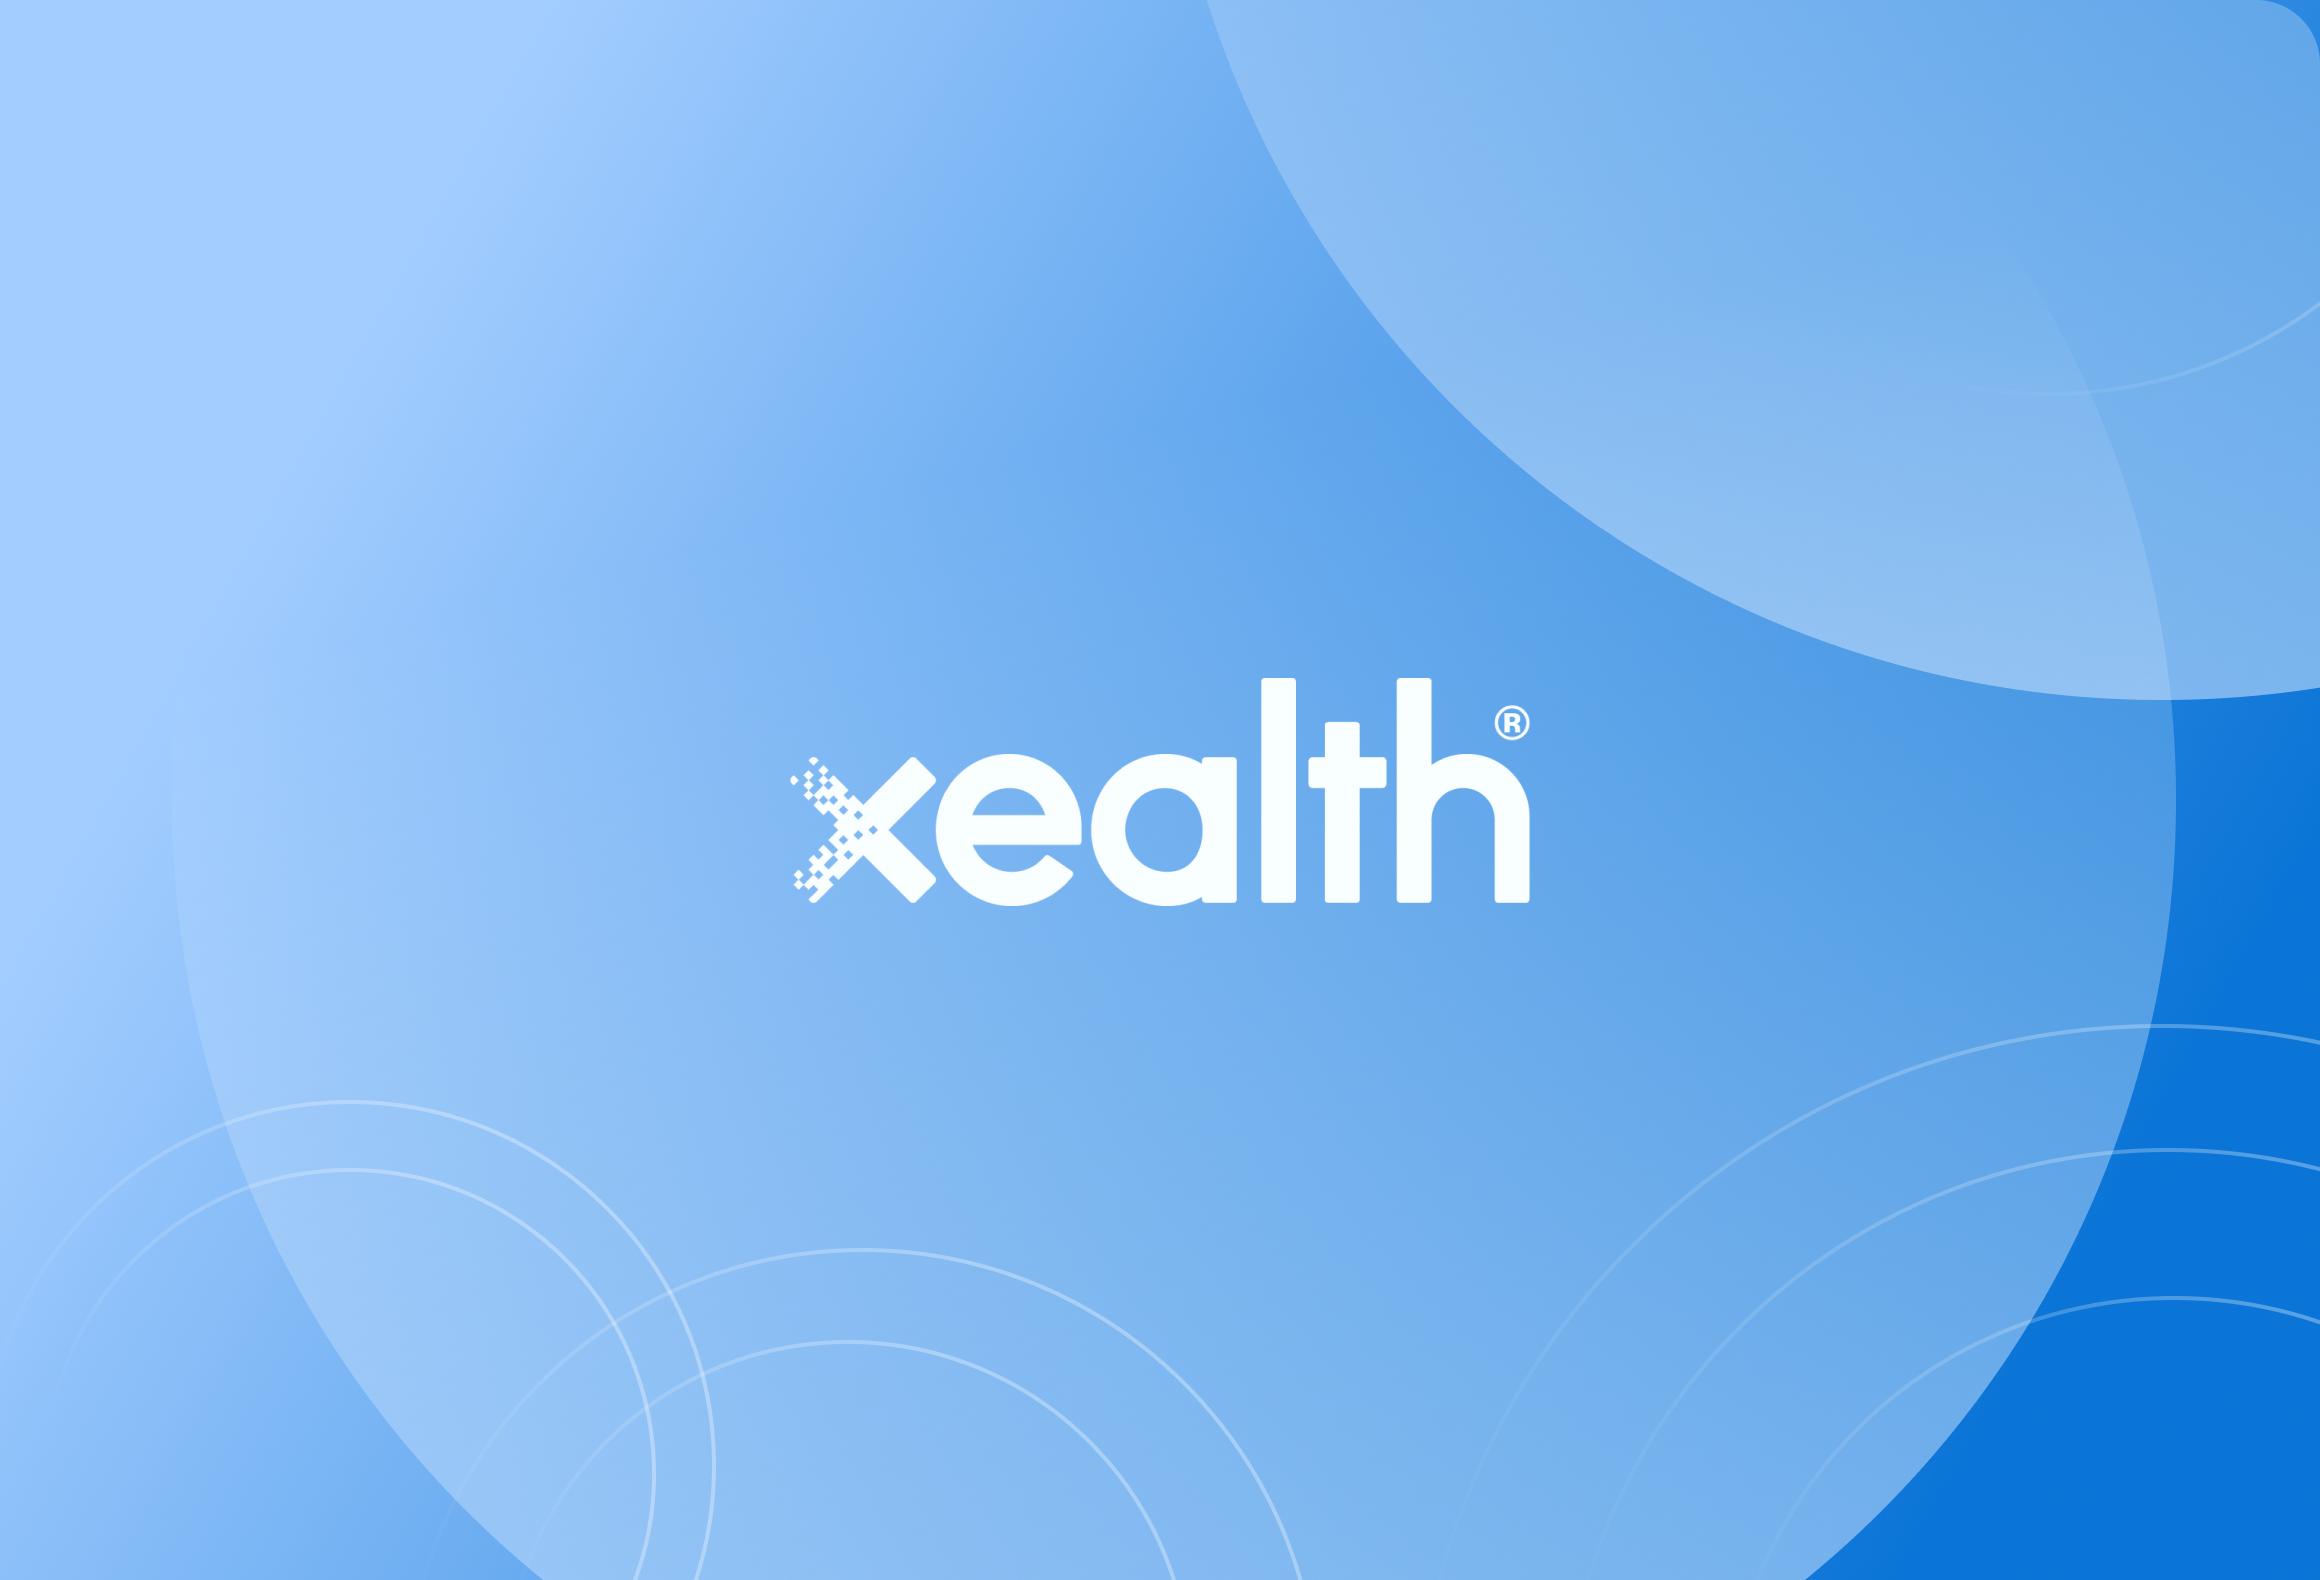 white xealth logo on a blue background